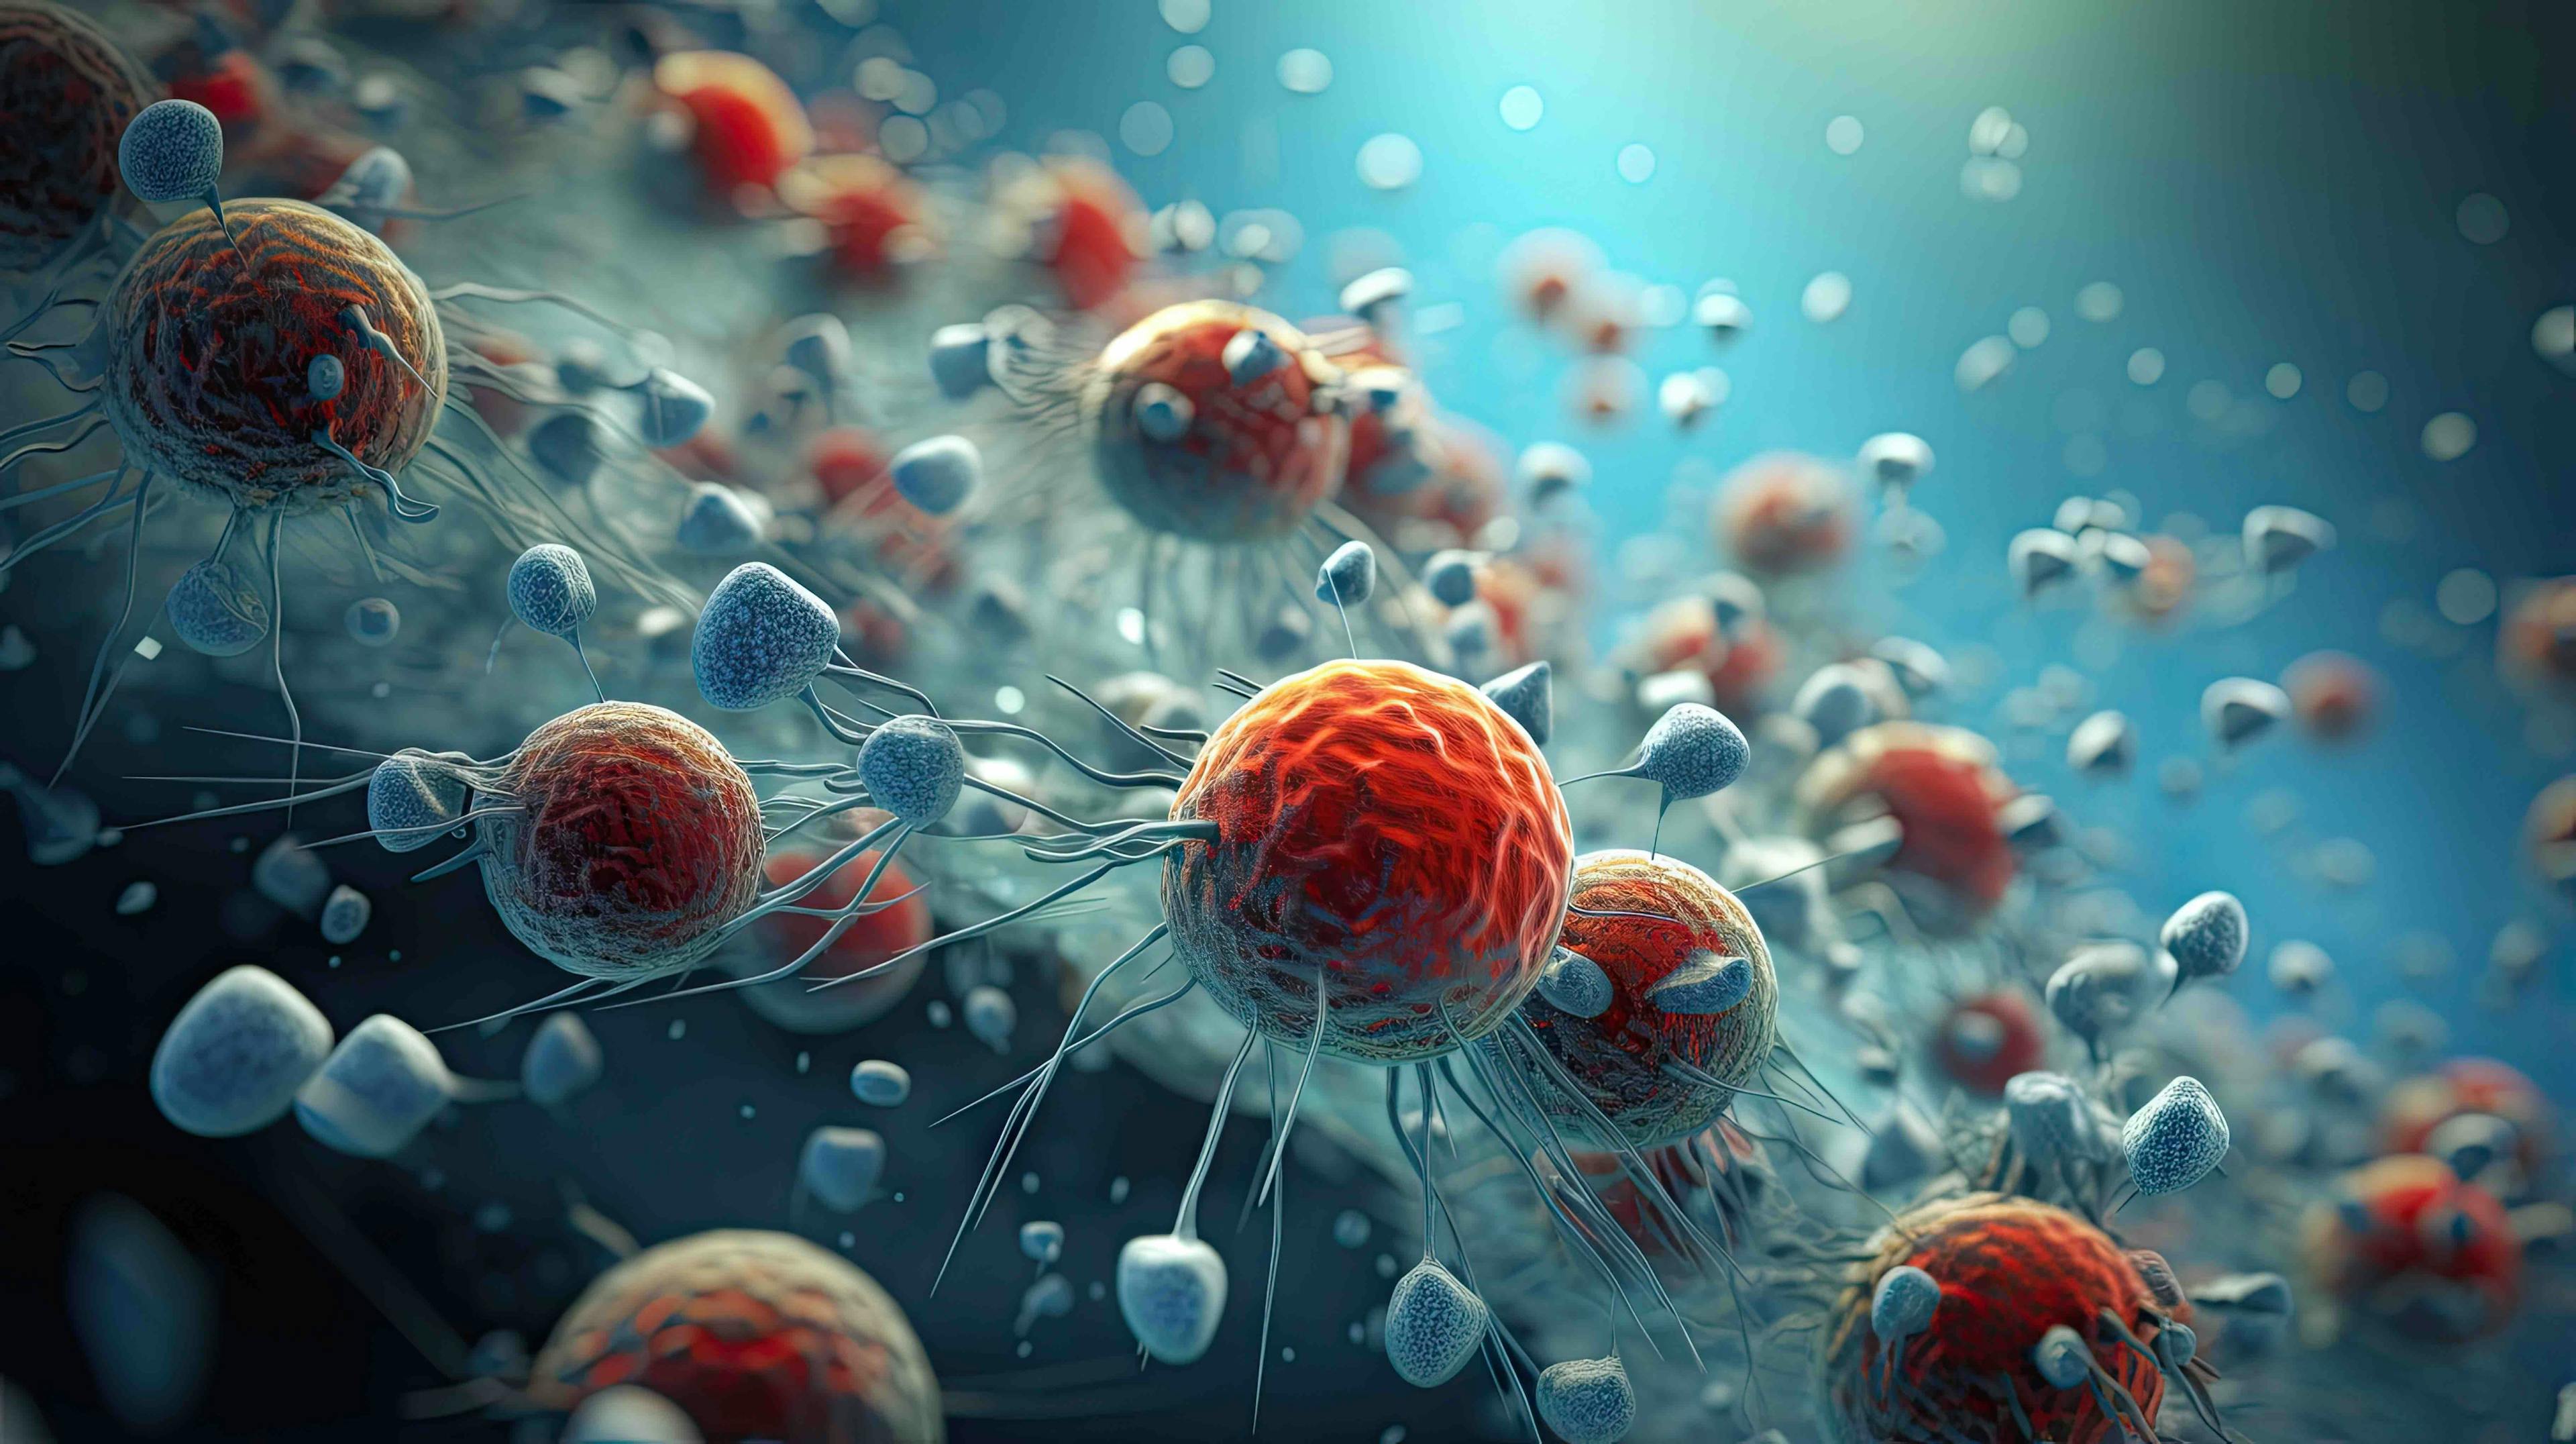 Tumor microenvironment rendering | Image credit: HN Works - stock.adobe.com